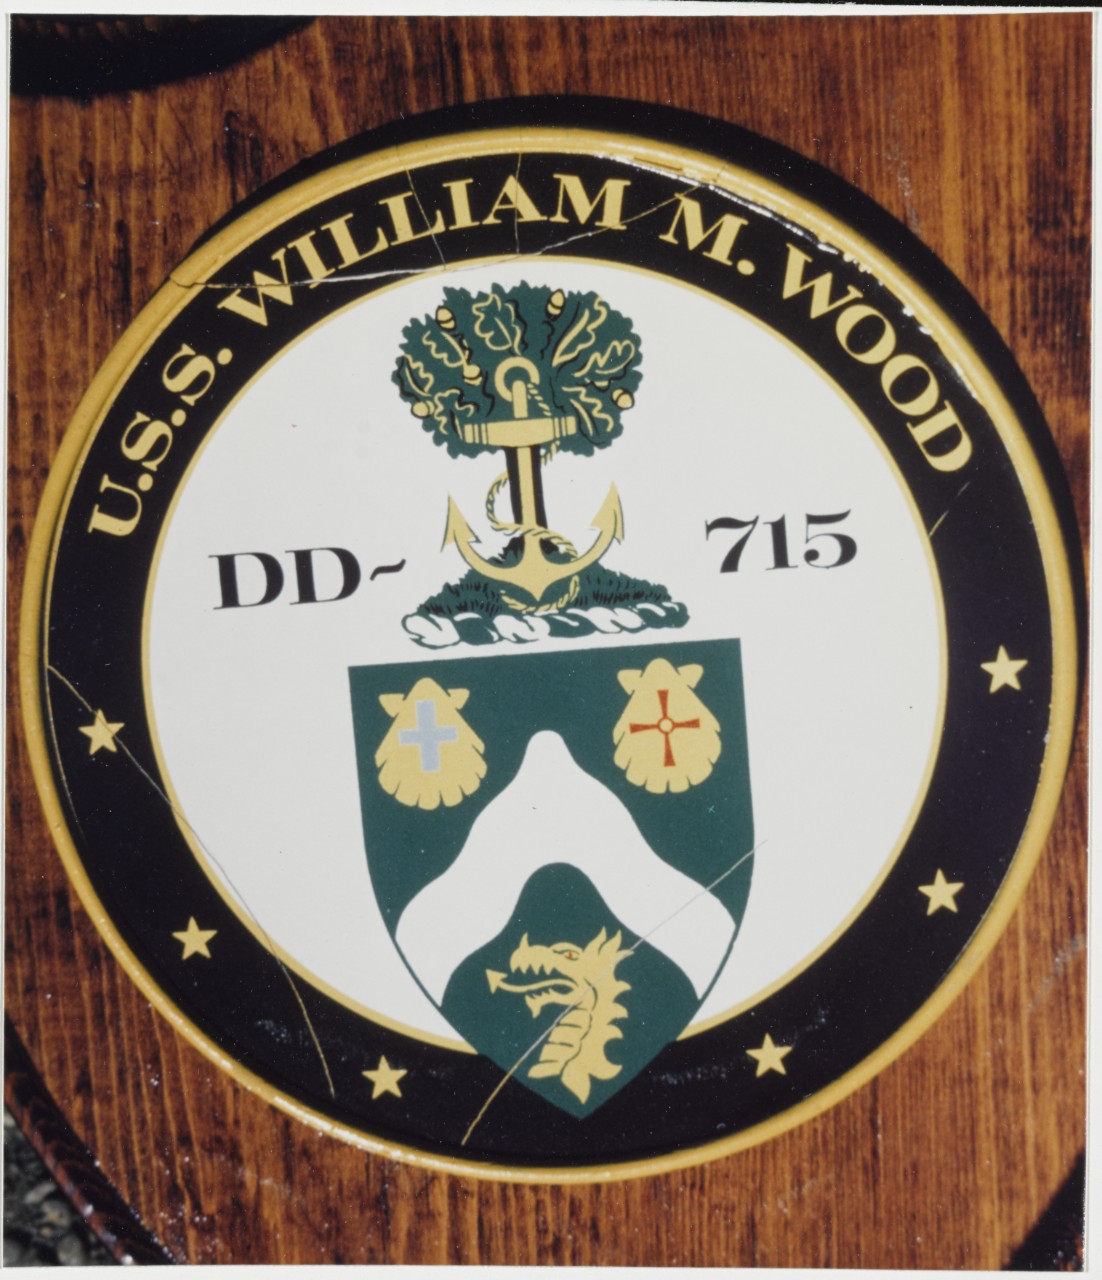 Insignia: USS WILLIAM M. WOOD (DD-715) Emblem adopted in 1965.